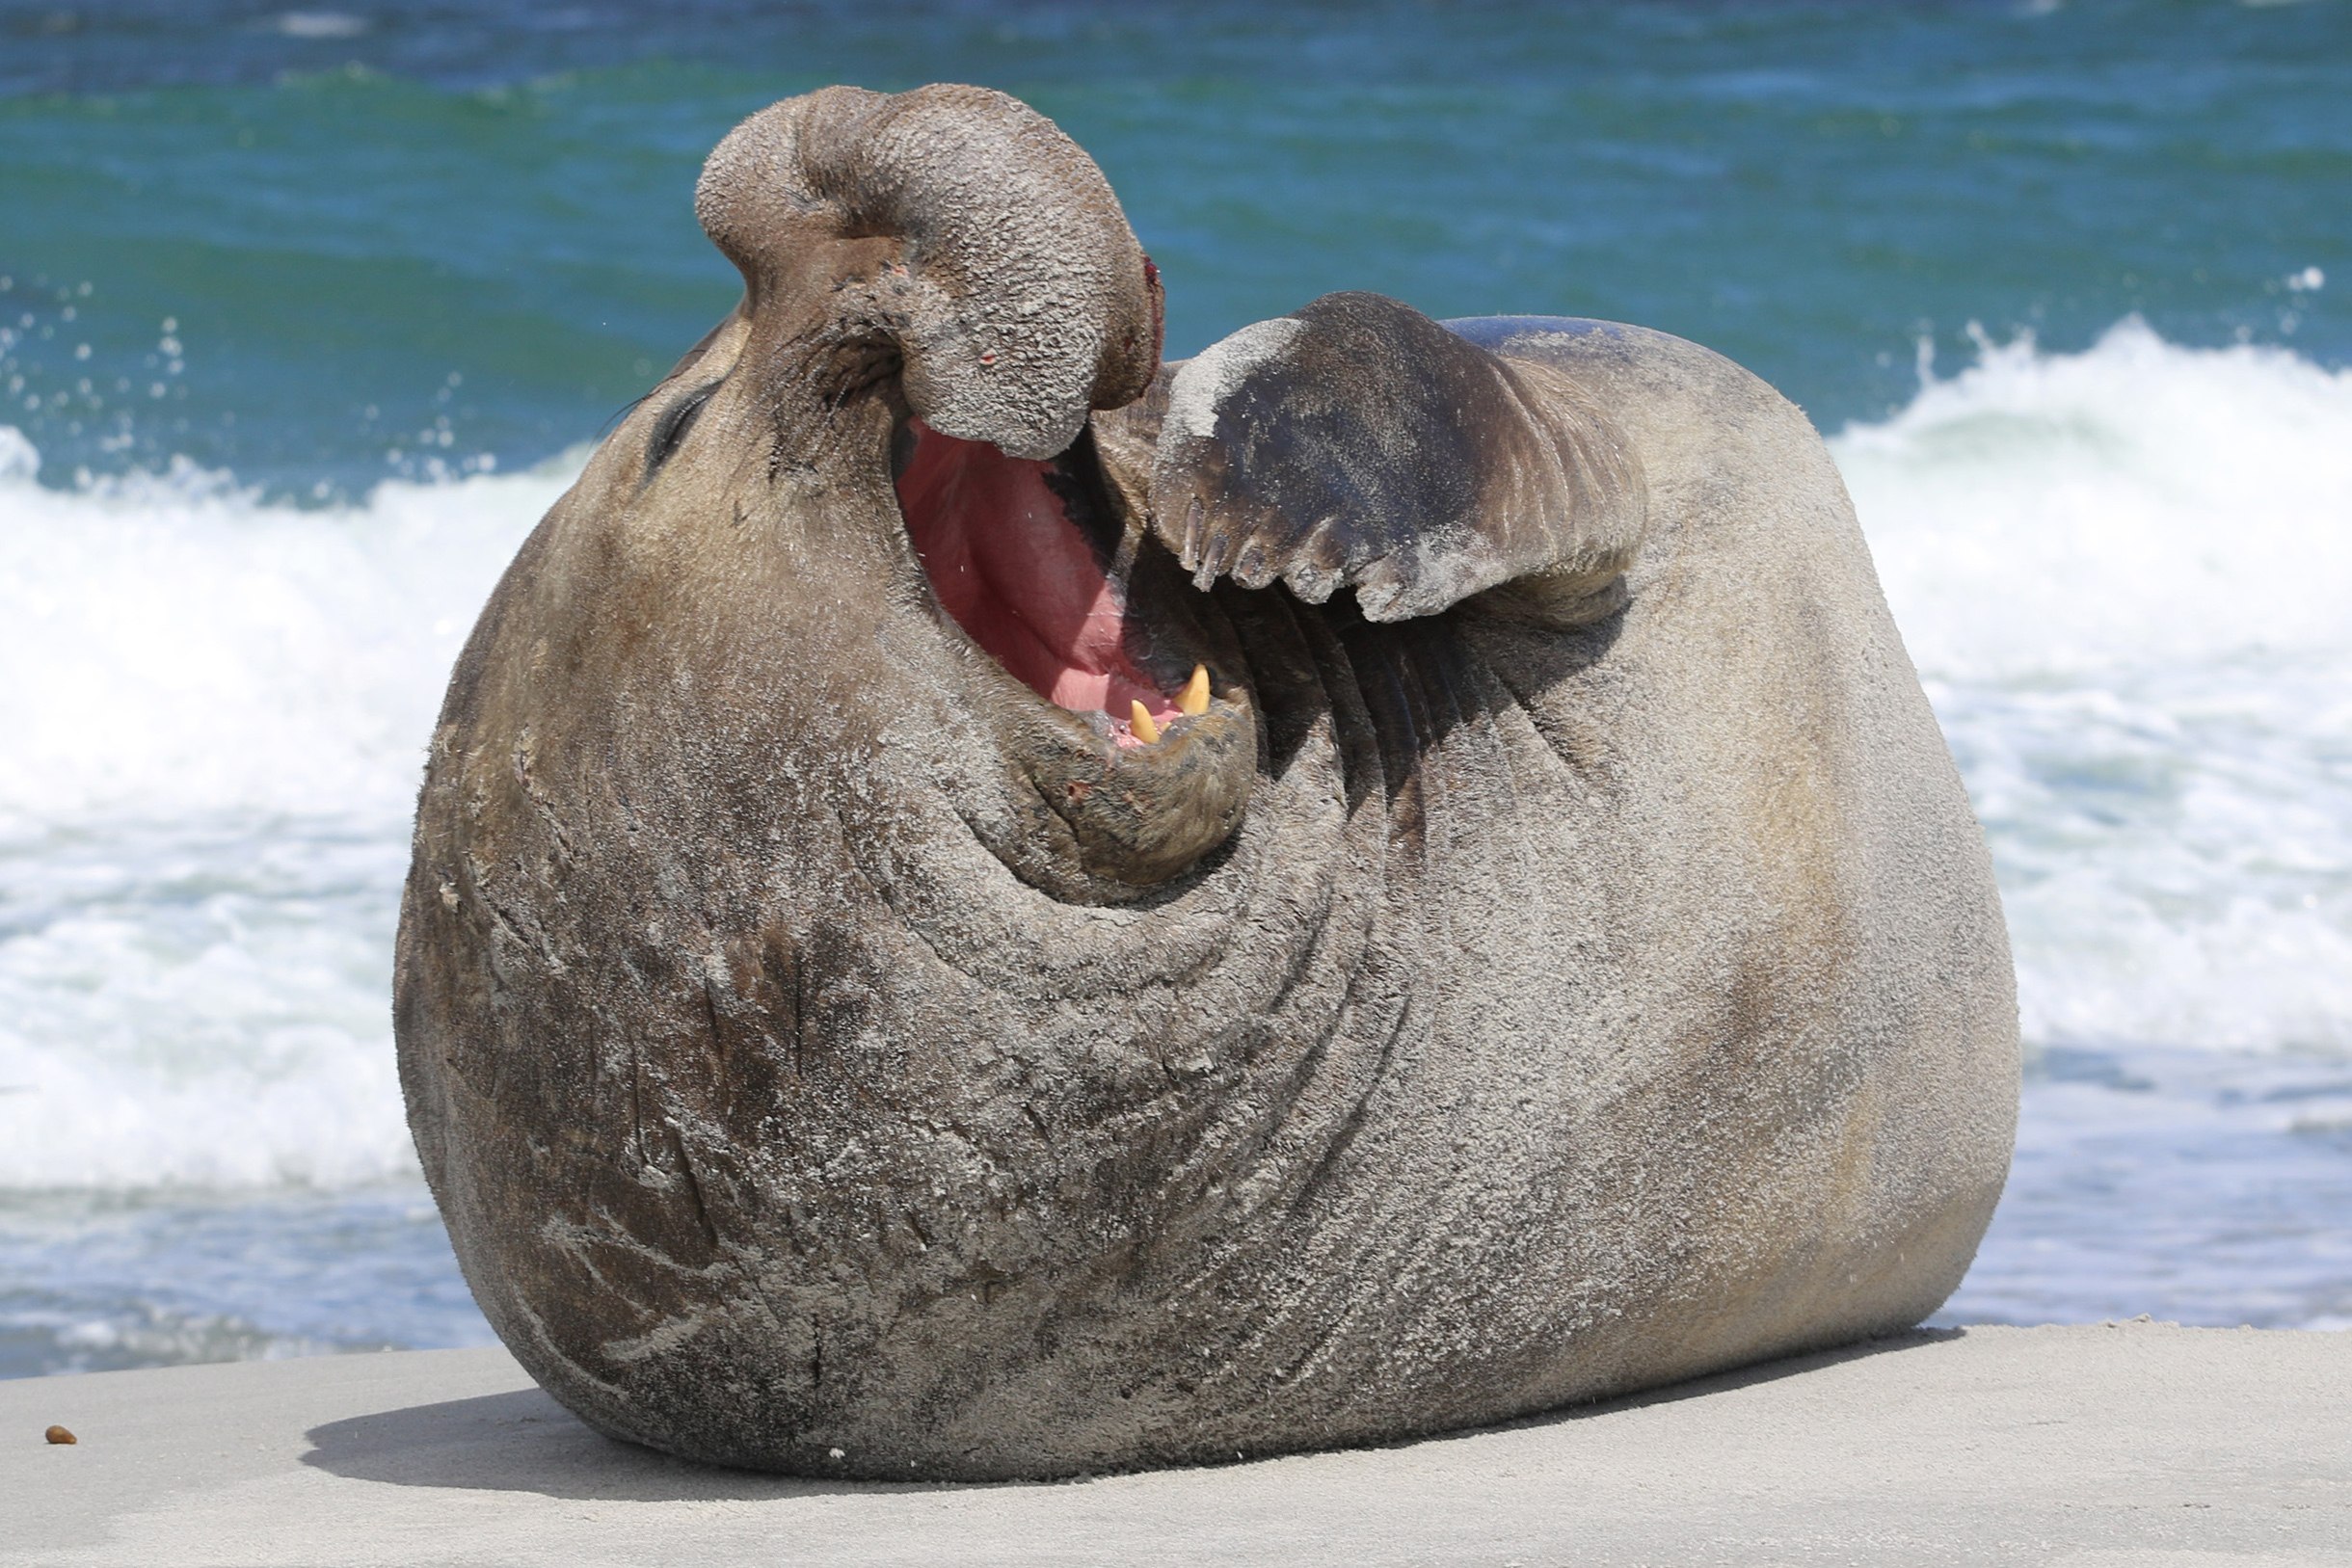 Elephant seal. Ластоногие морской слон. Южный морской слон в Антарктиде. Тюлень морской слон. Тюлень Южный морской слон.